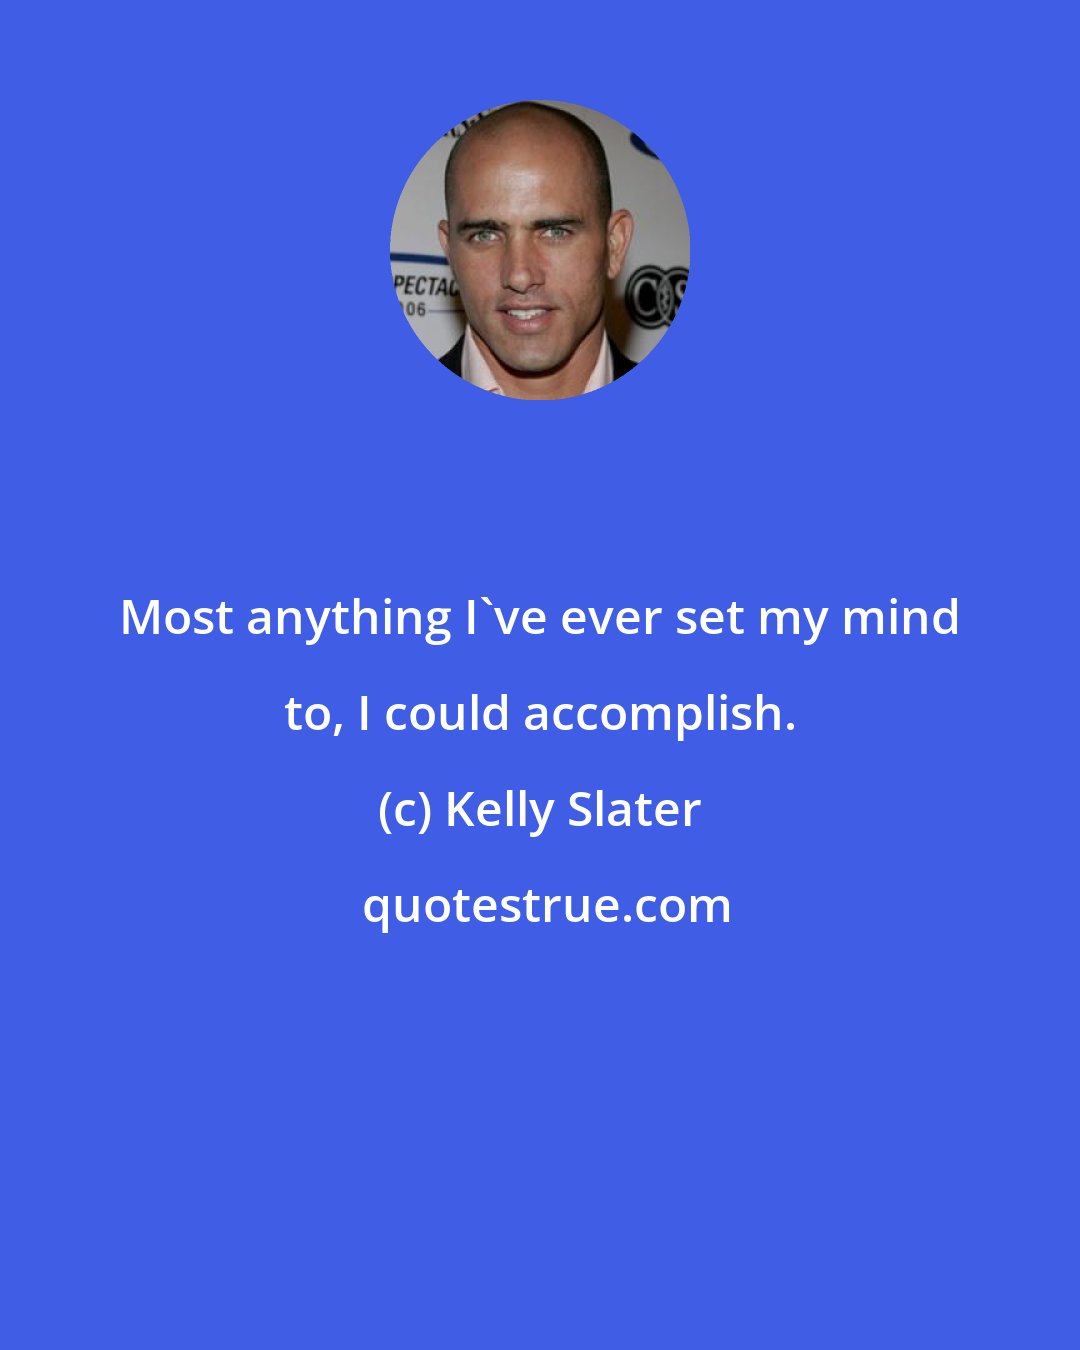 Kelly Slater: Most anything I've ever set my mind to, I could accomplish.